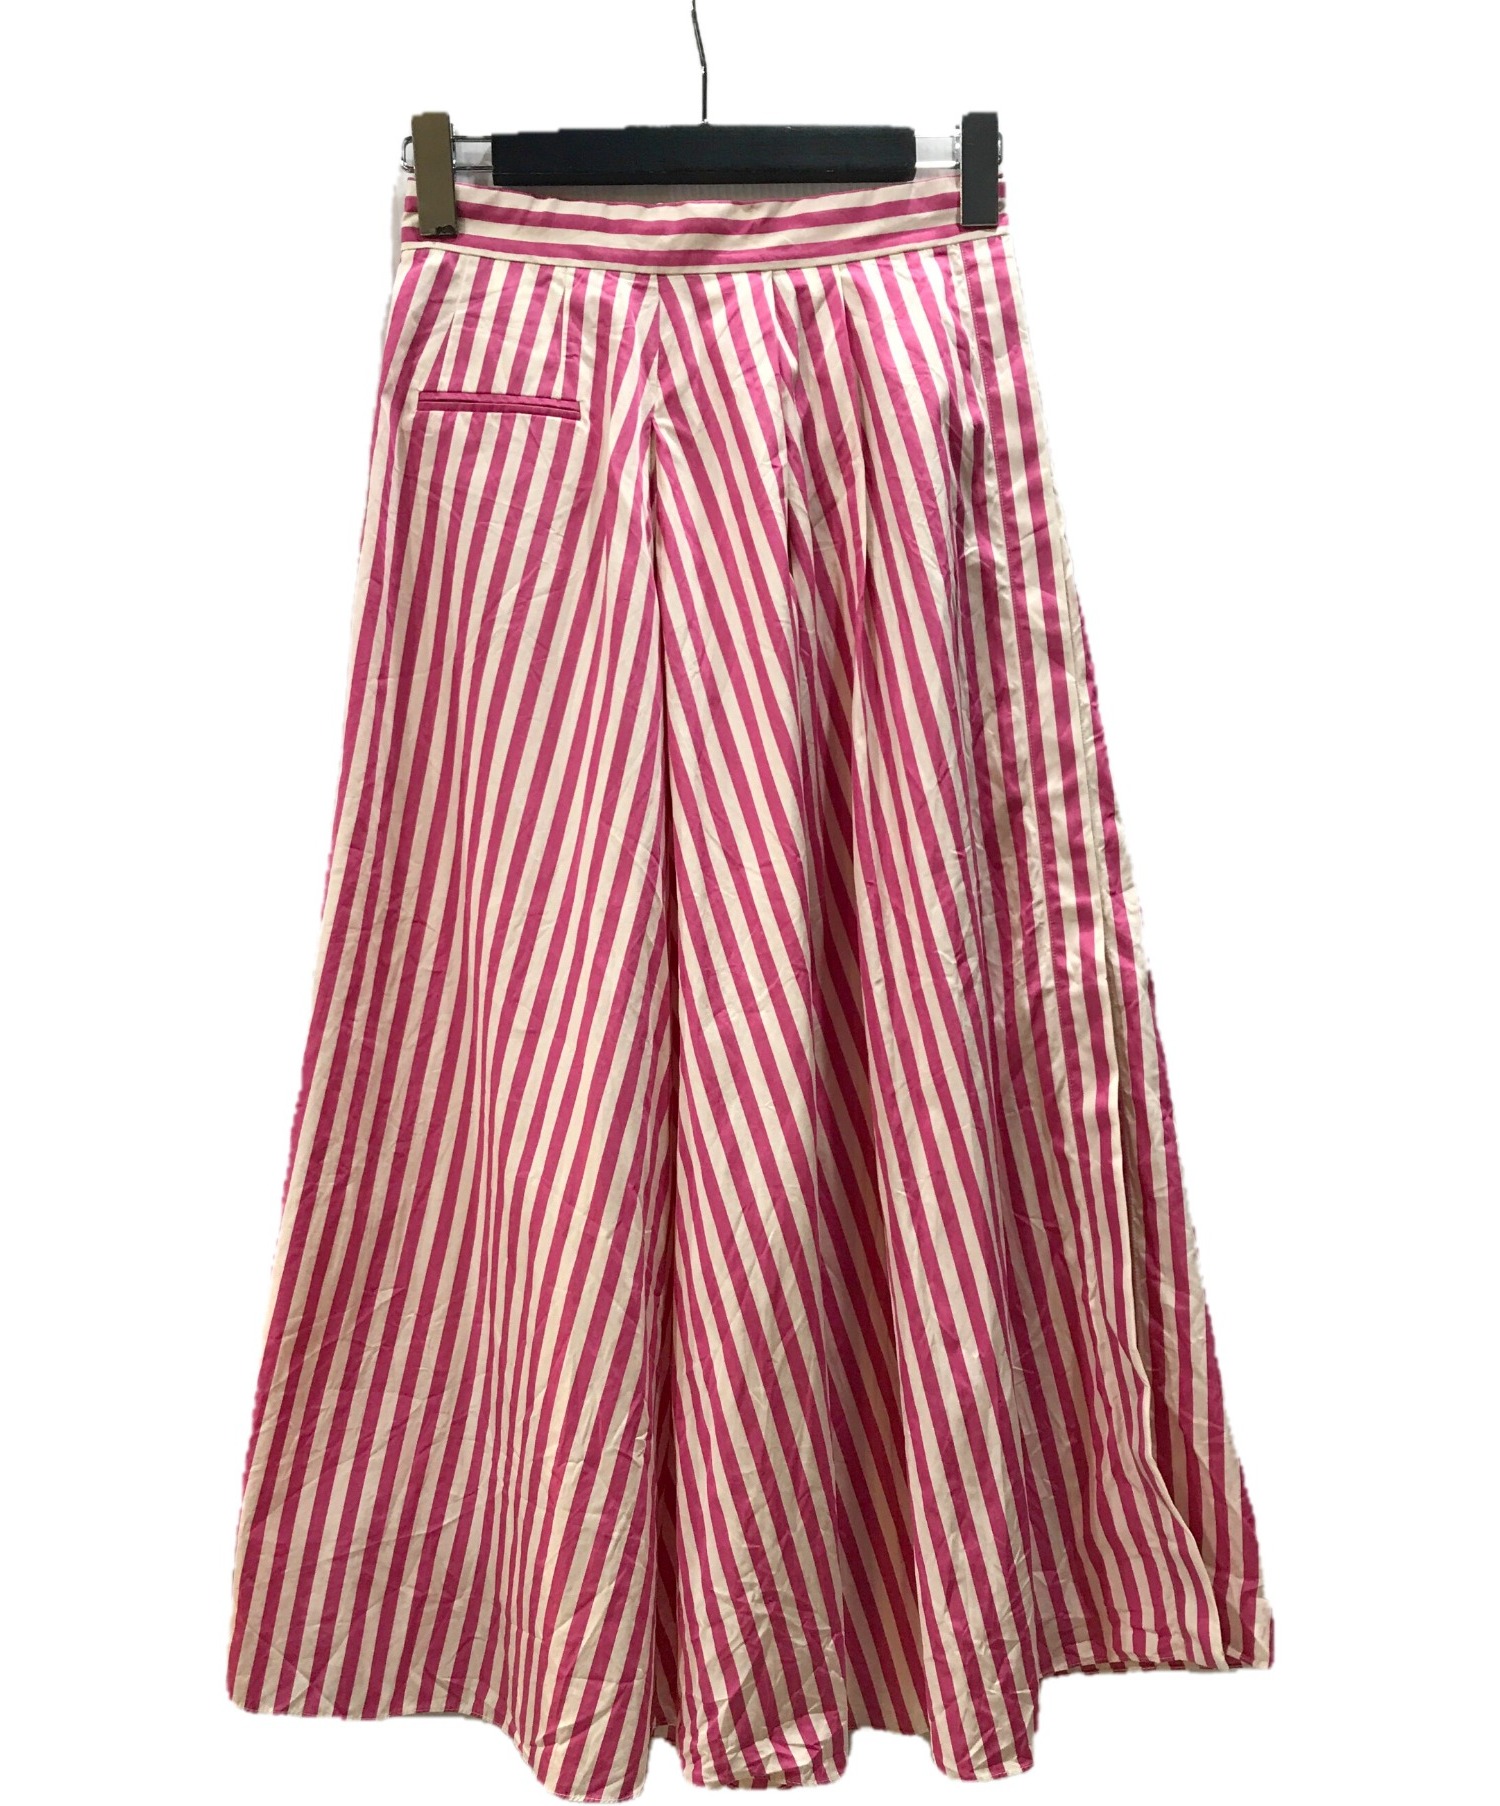 MAISON RABIH KAYROUZ (メゾン・ラビ・カイルー) ストライプスカート ピンク サイズ:34 Drawer 6524-343-1445